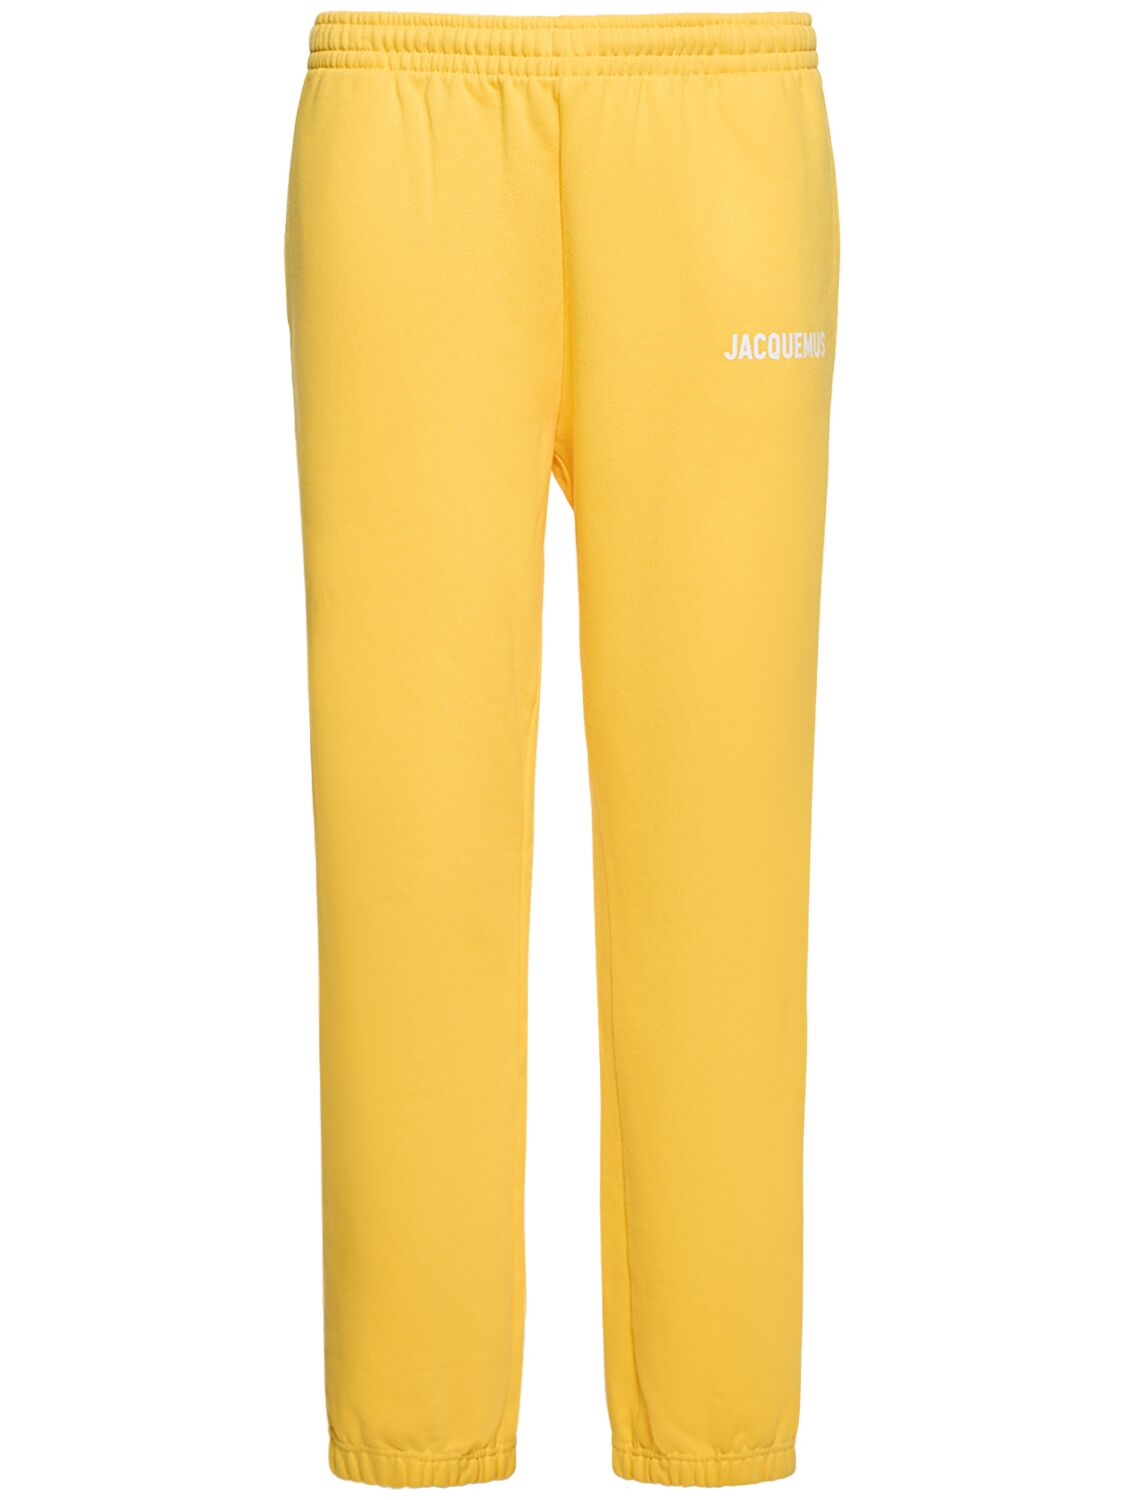 Jacquemus Le Jogging Cotton Sweatpants In Yellow